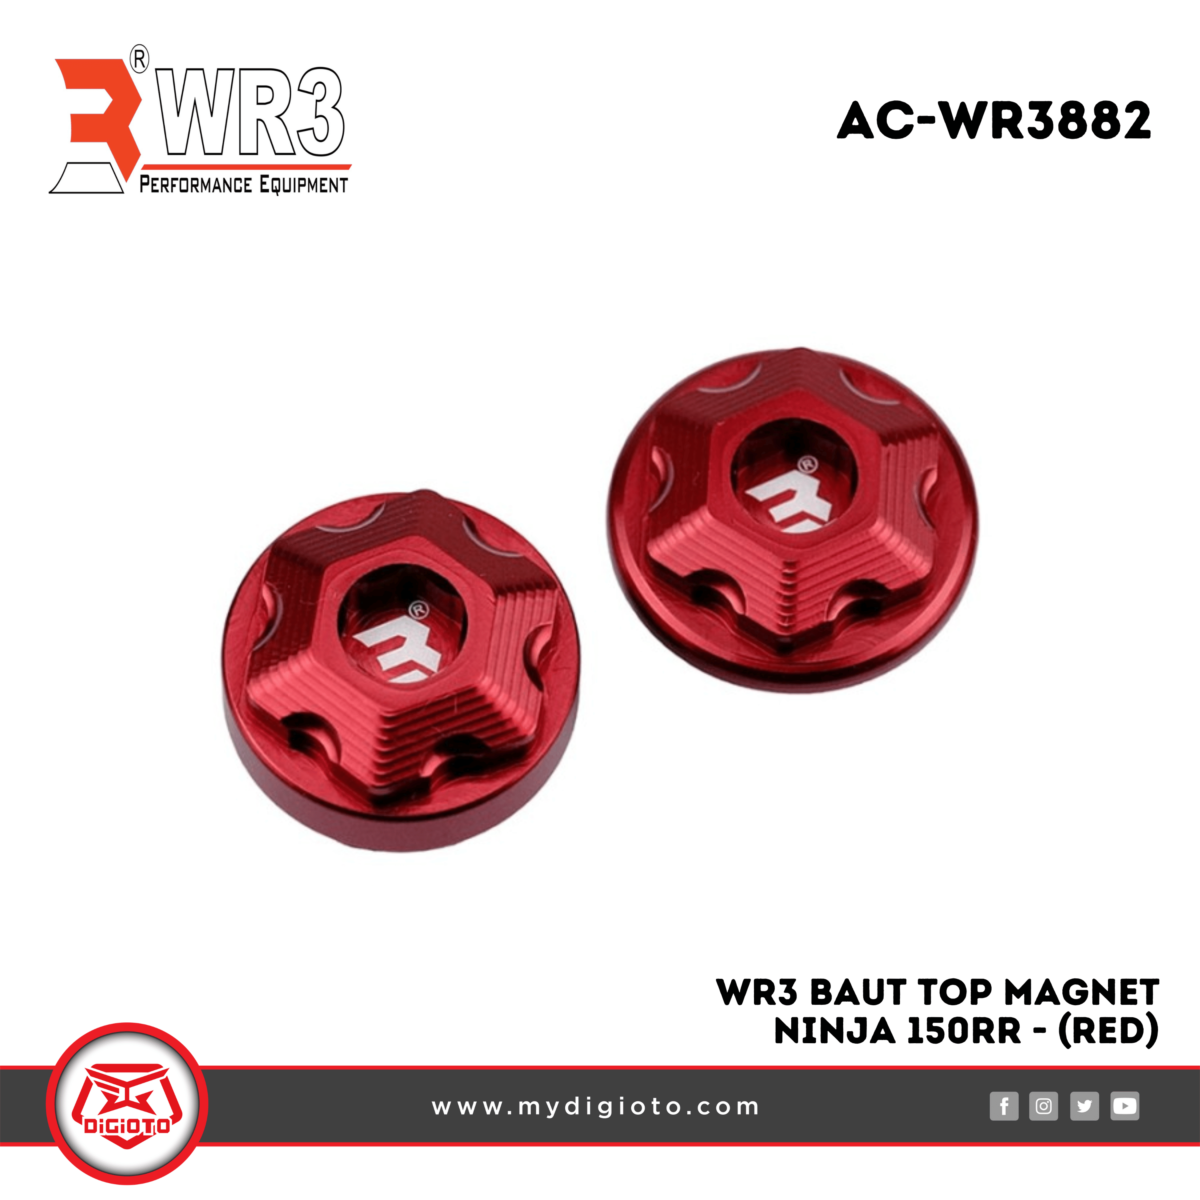 WR3 Baut Top Magnet Ninja 150RR - Red